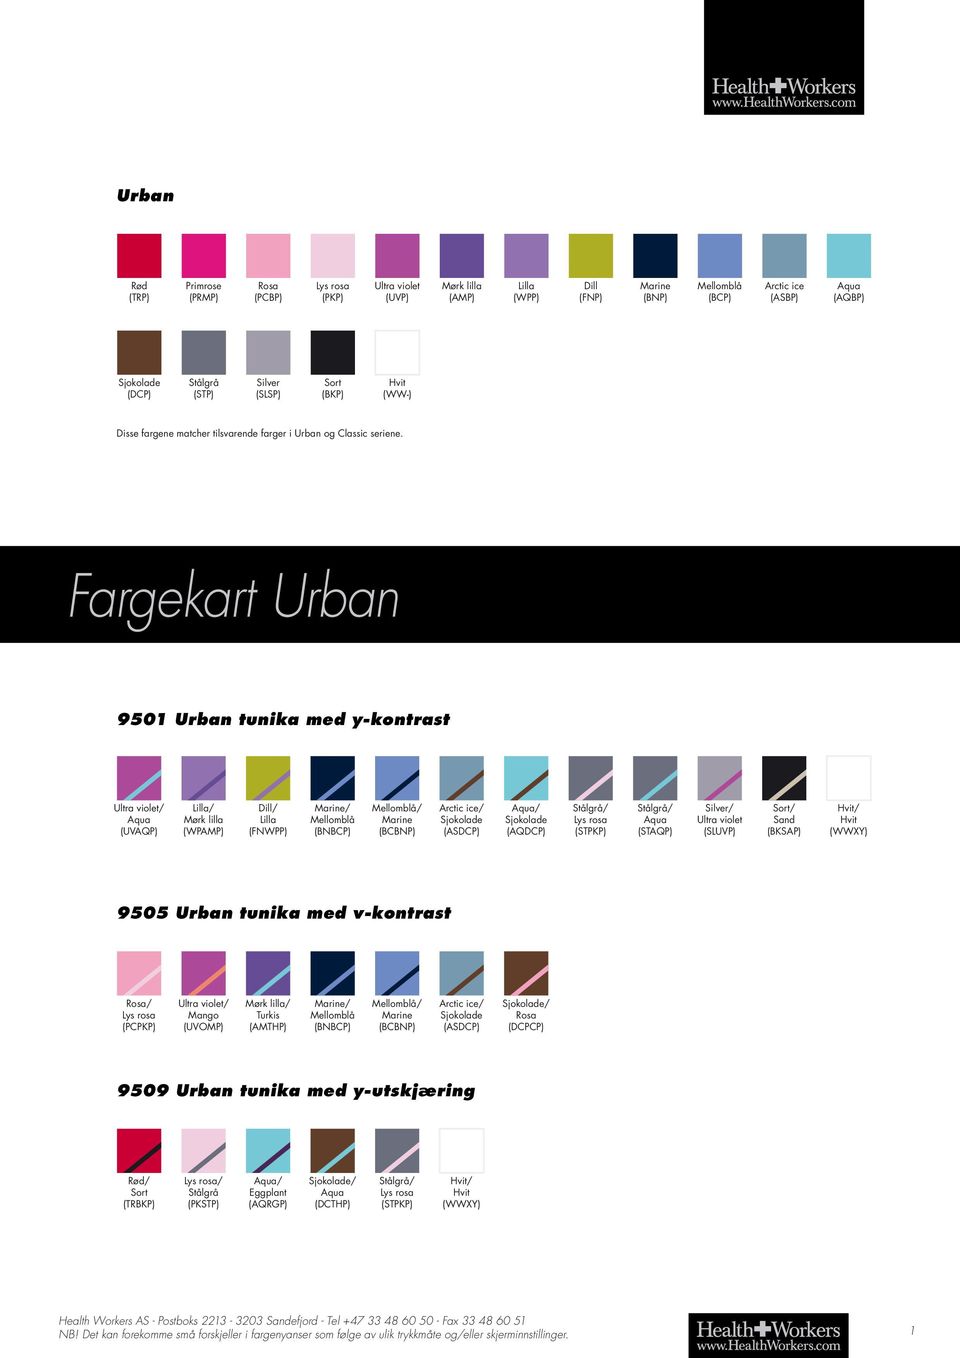 Fargekart Urban 9501 Urban tunika med y-kontrast Ultra violet/ (UVAQP) / M rk lilla (WPAMP) Dill/ (FNWPP) / / Arctic ice/ (ASDCP) / (AQDCP) (STPKP) (STAQP) Silver/ Ultra violet (SLUVP) / (BKSAP) /